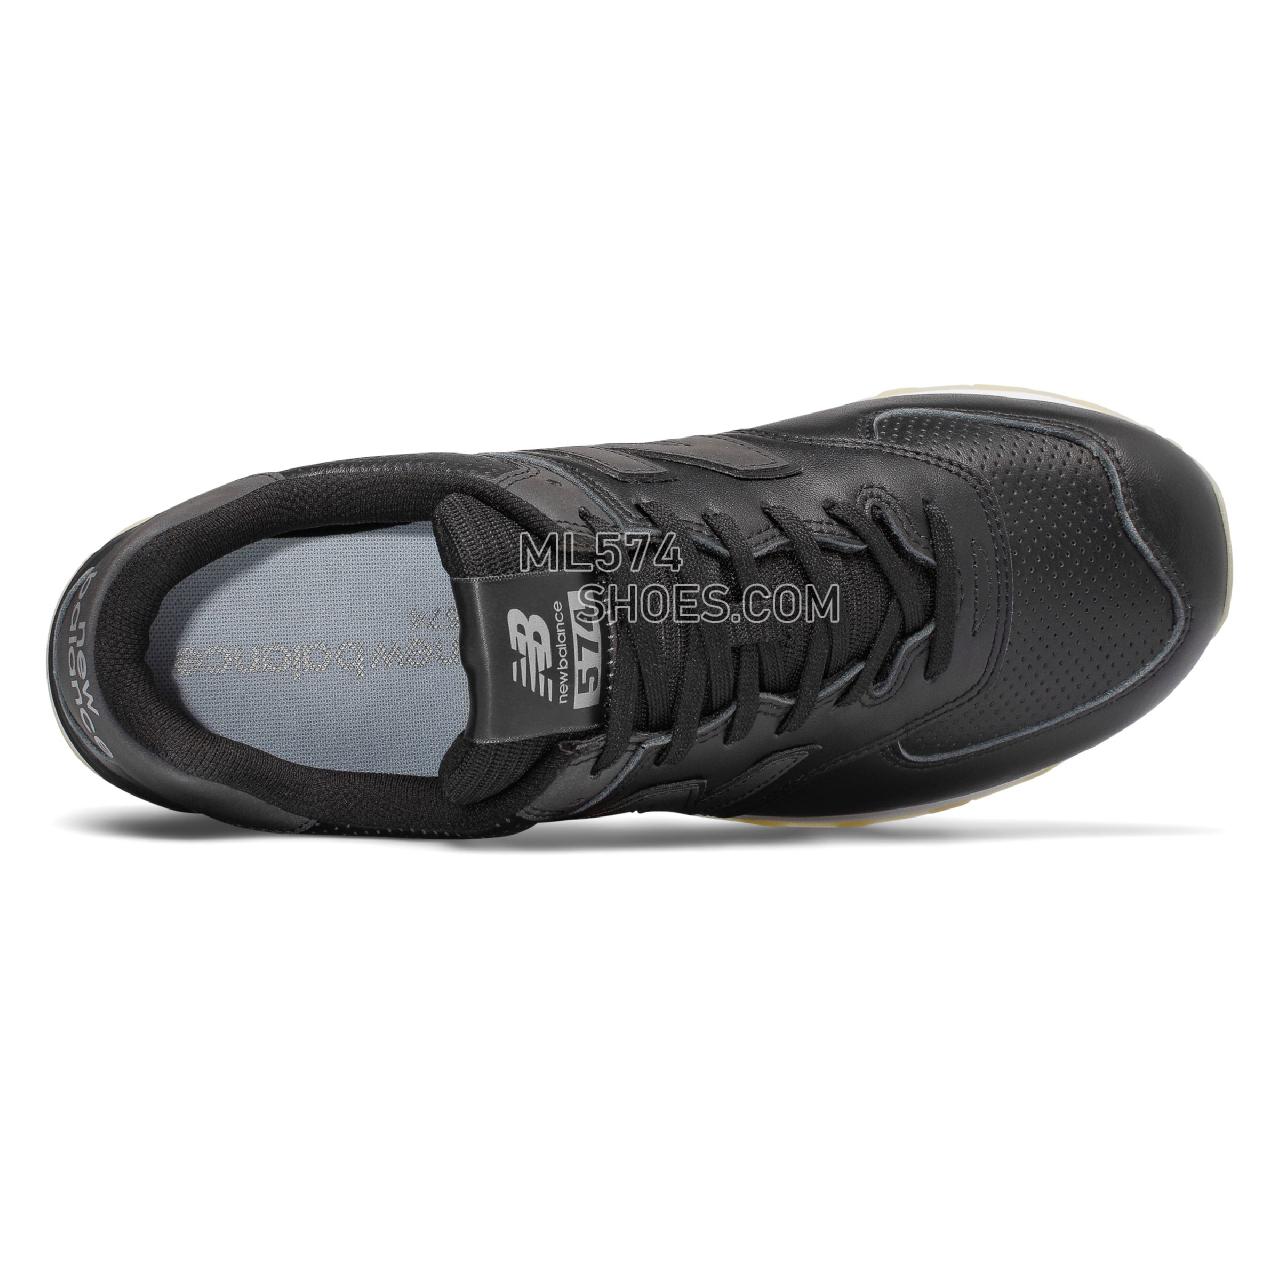 New Balance 574 Luxe Leather - Men's 574 - Classic Black - ML574DAK